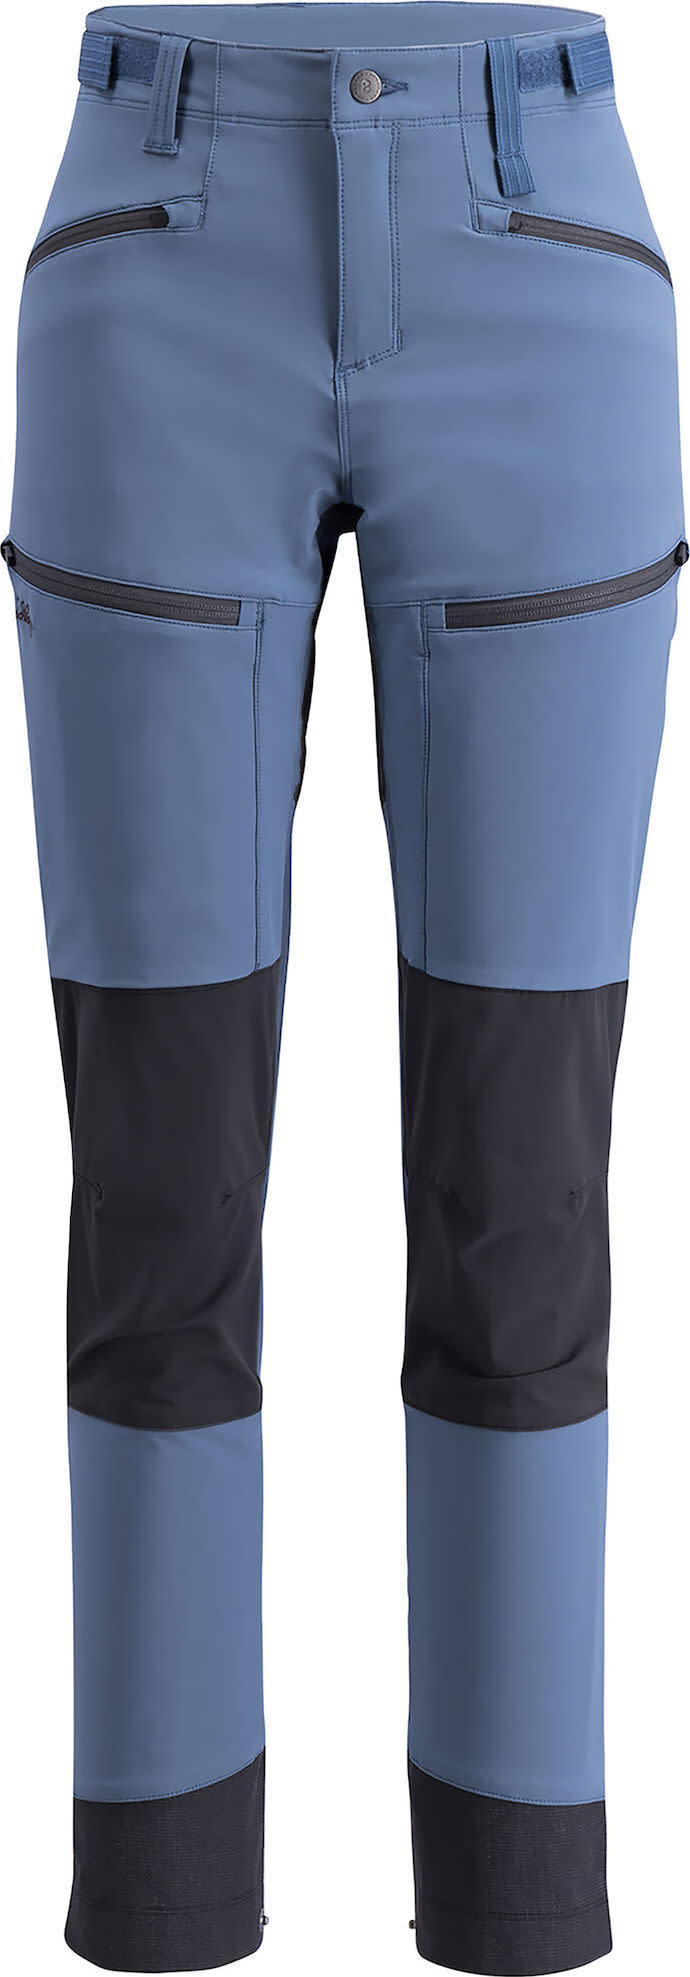 Lundhags Lundhags Women's Padje Stretch Pant Denim Blue/Charcoal 34, Denim Blue/Charcoal